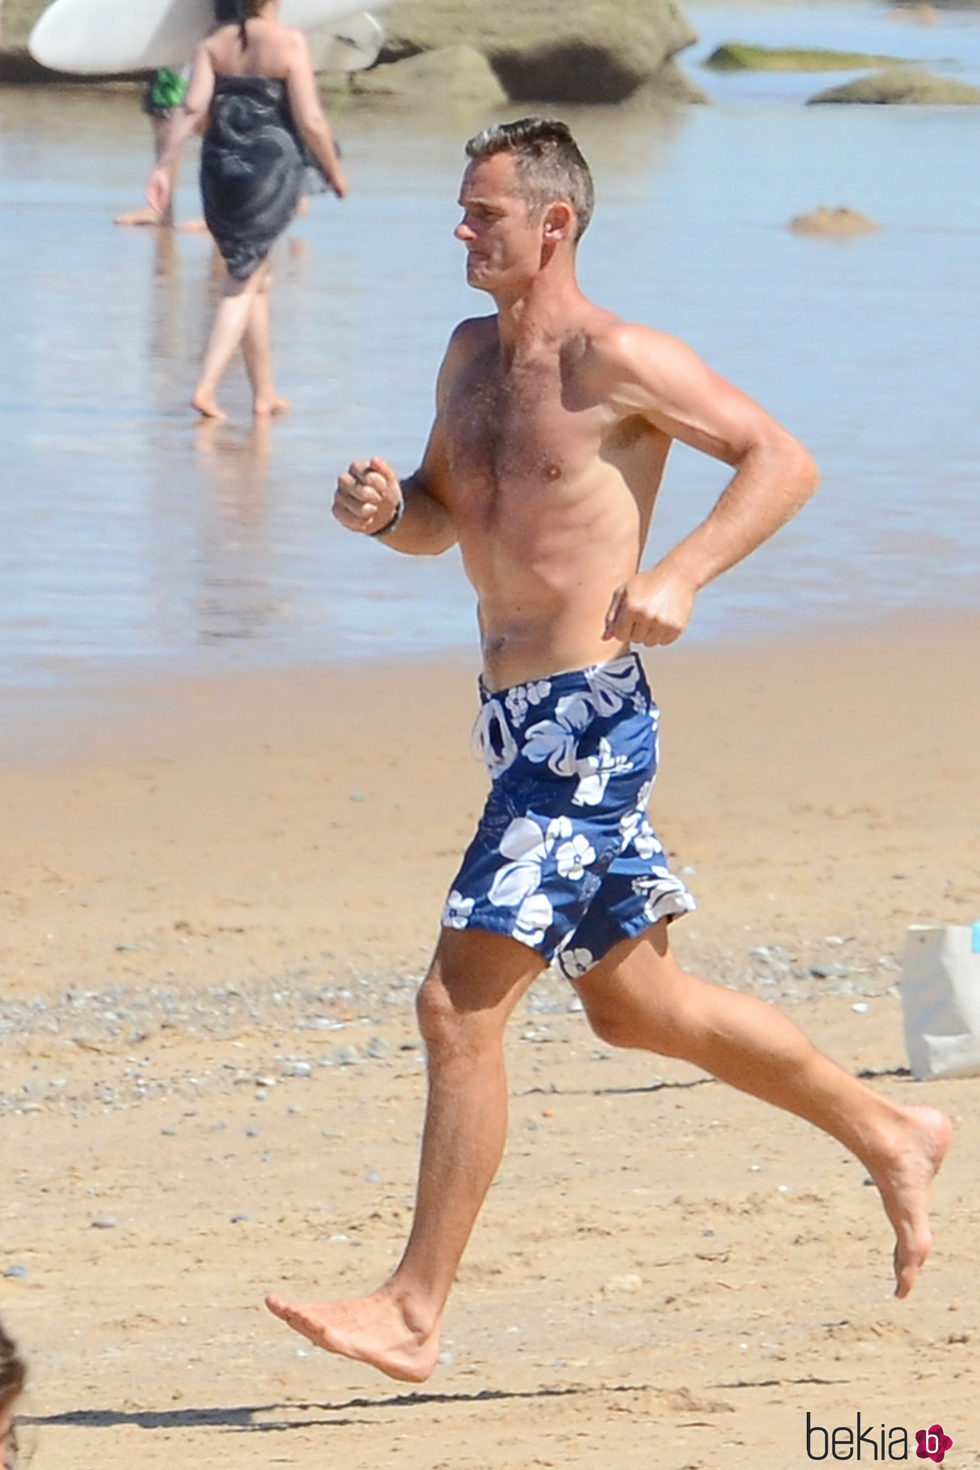 Iñaki Urdangarin corriendo por la playa en bañador